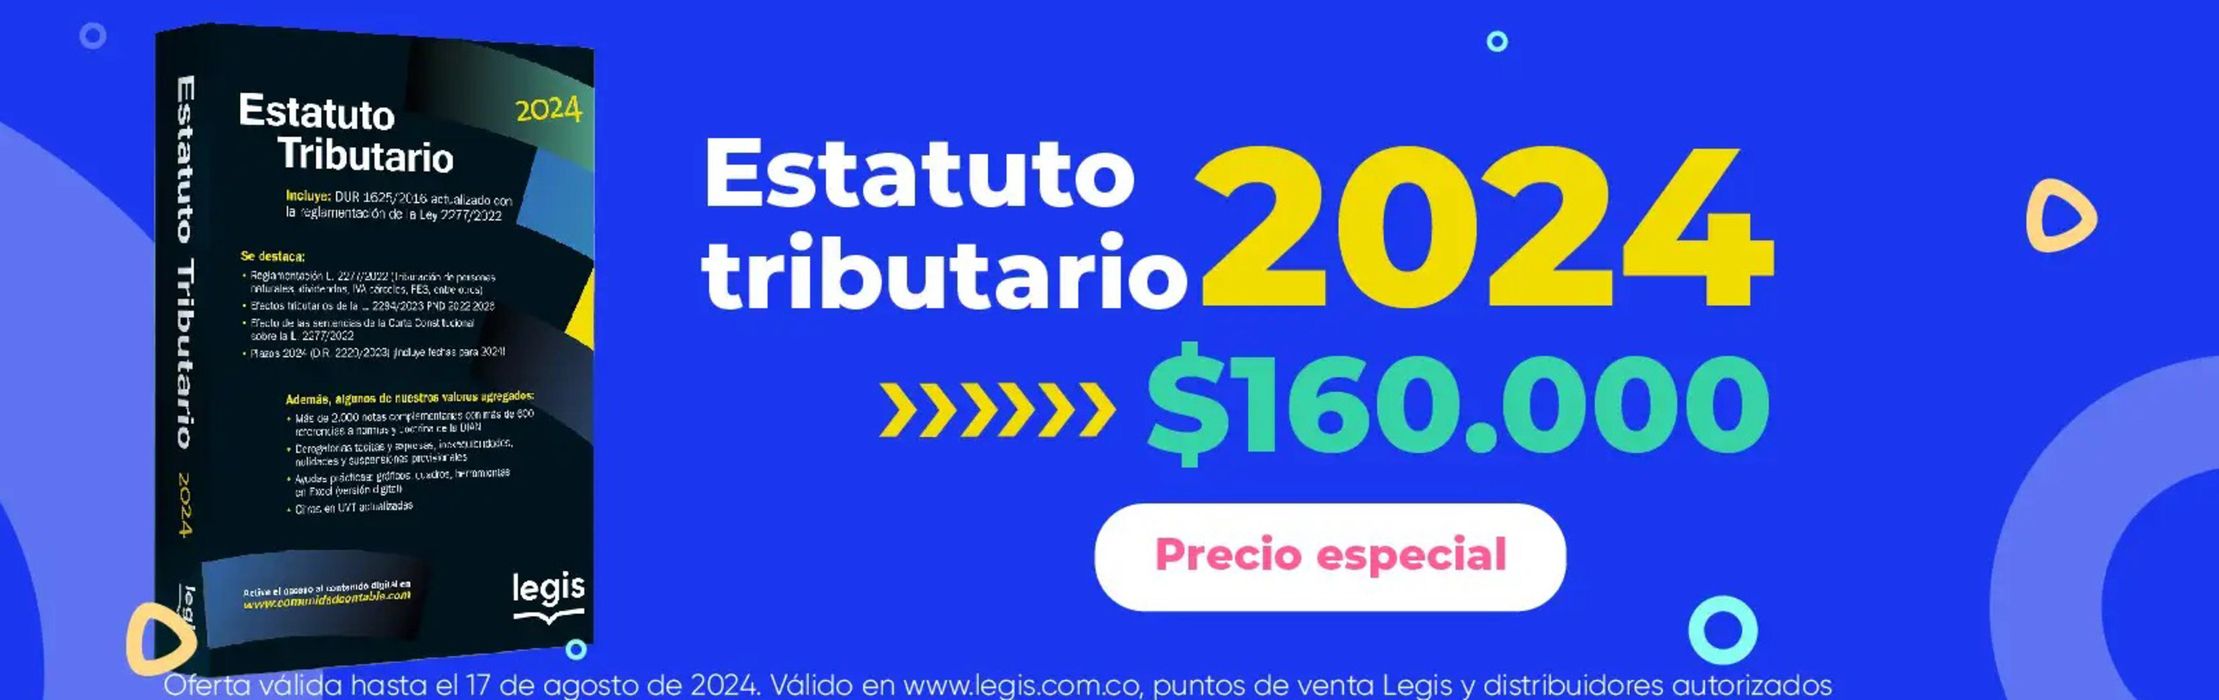 Catálogo Legis en Medellín | Oferta Especial | 25/7/2024 - 17/8/2024